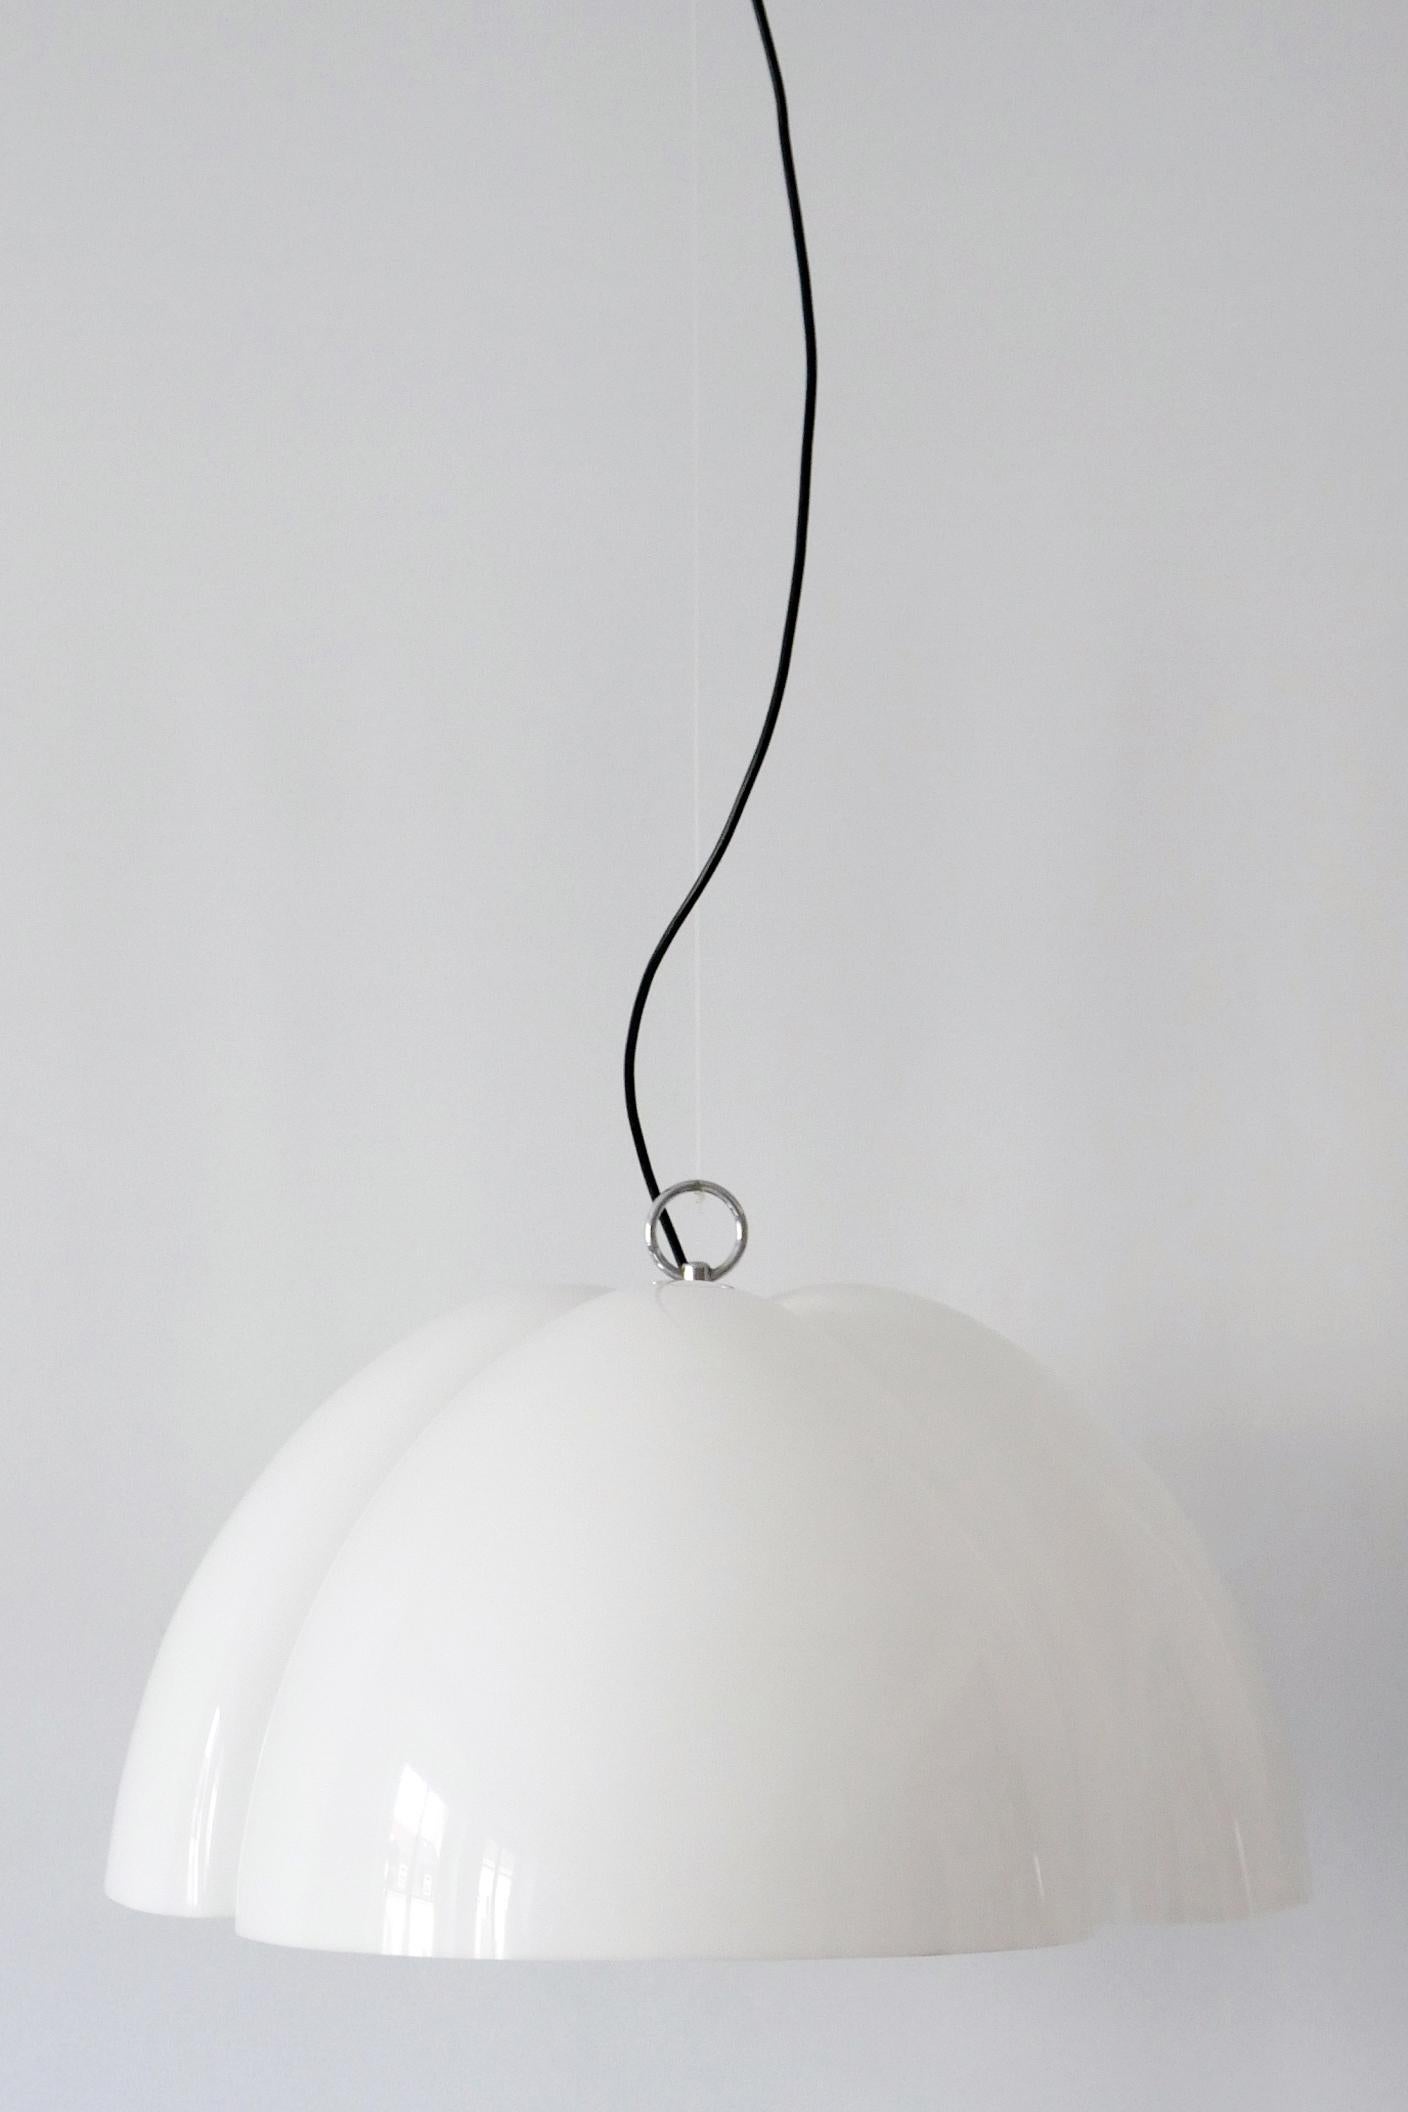 Mid-20th Century Large Mid-Century Modern Pendant Lamp Tricena I by Ingo Maurer for Design M 1968